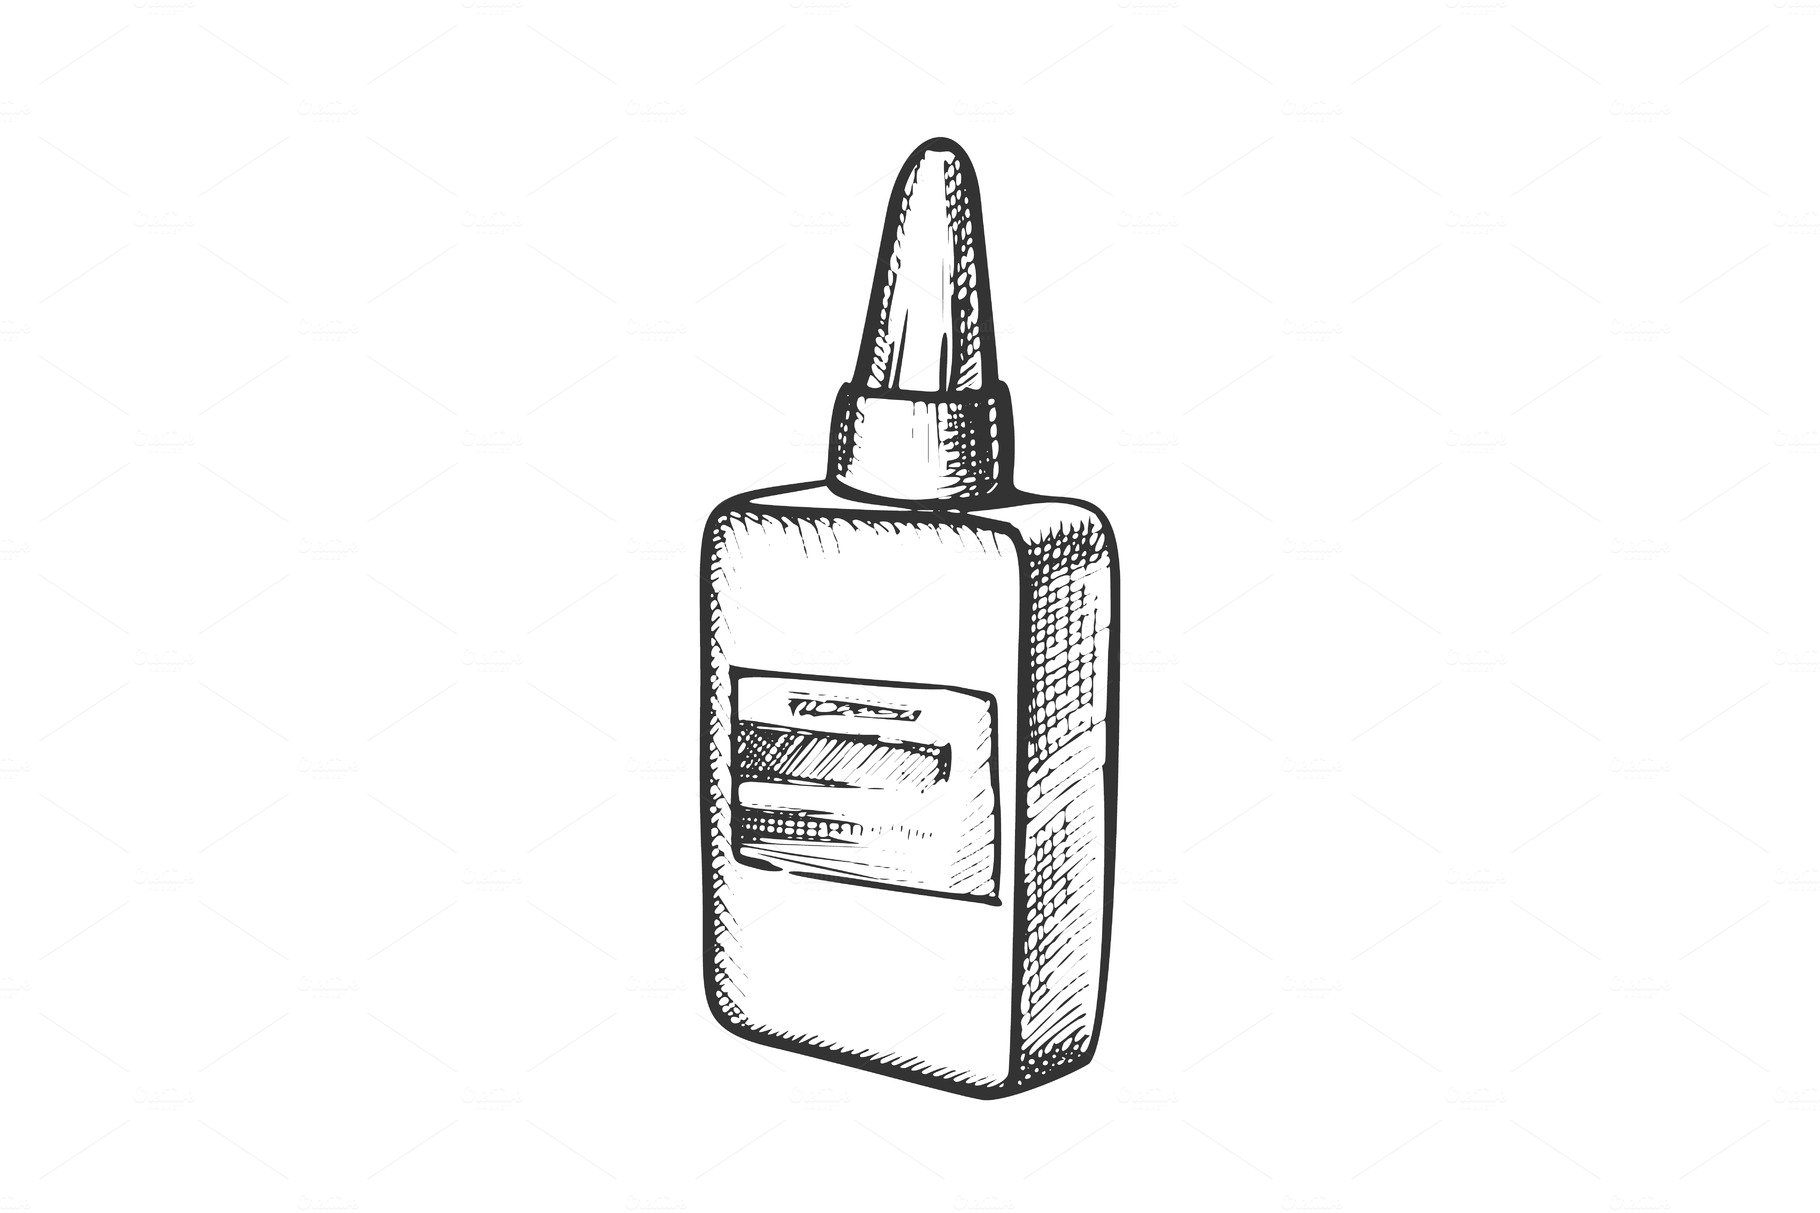 Glue Bottle Stationery Equipment cover image.